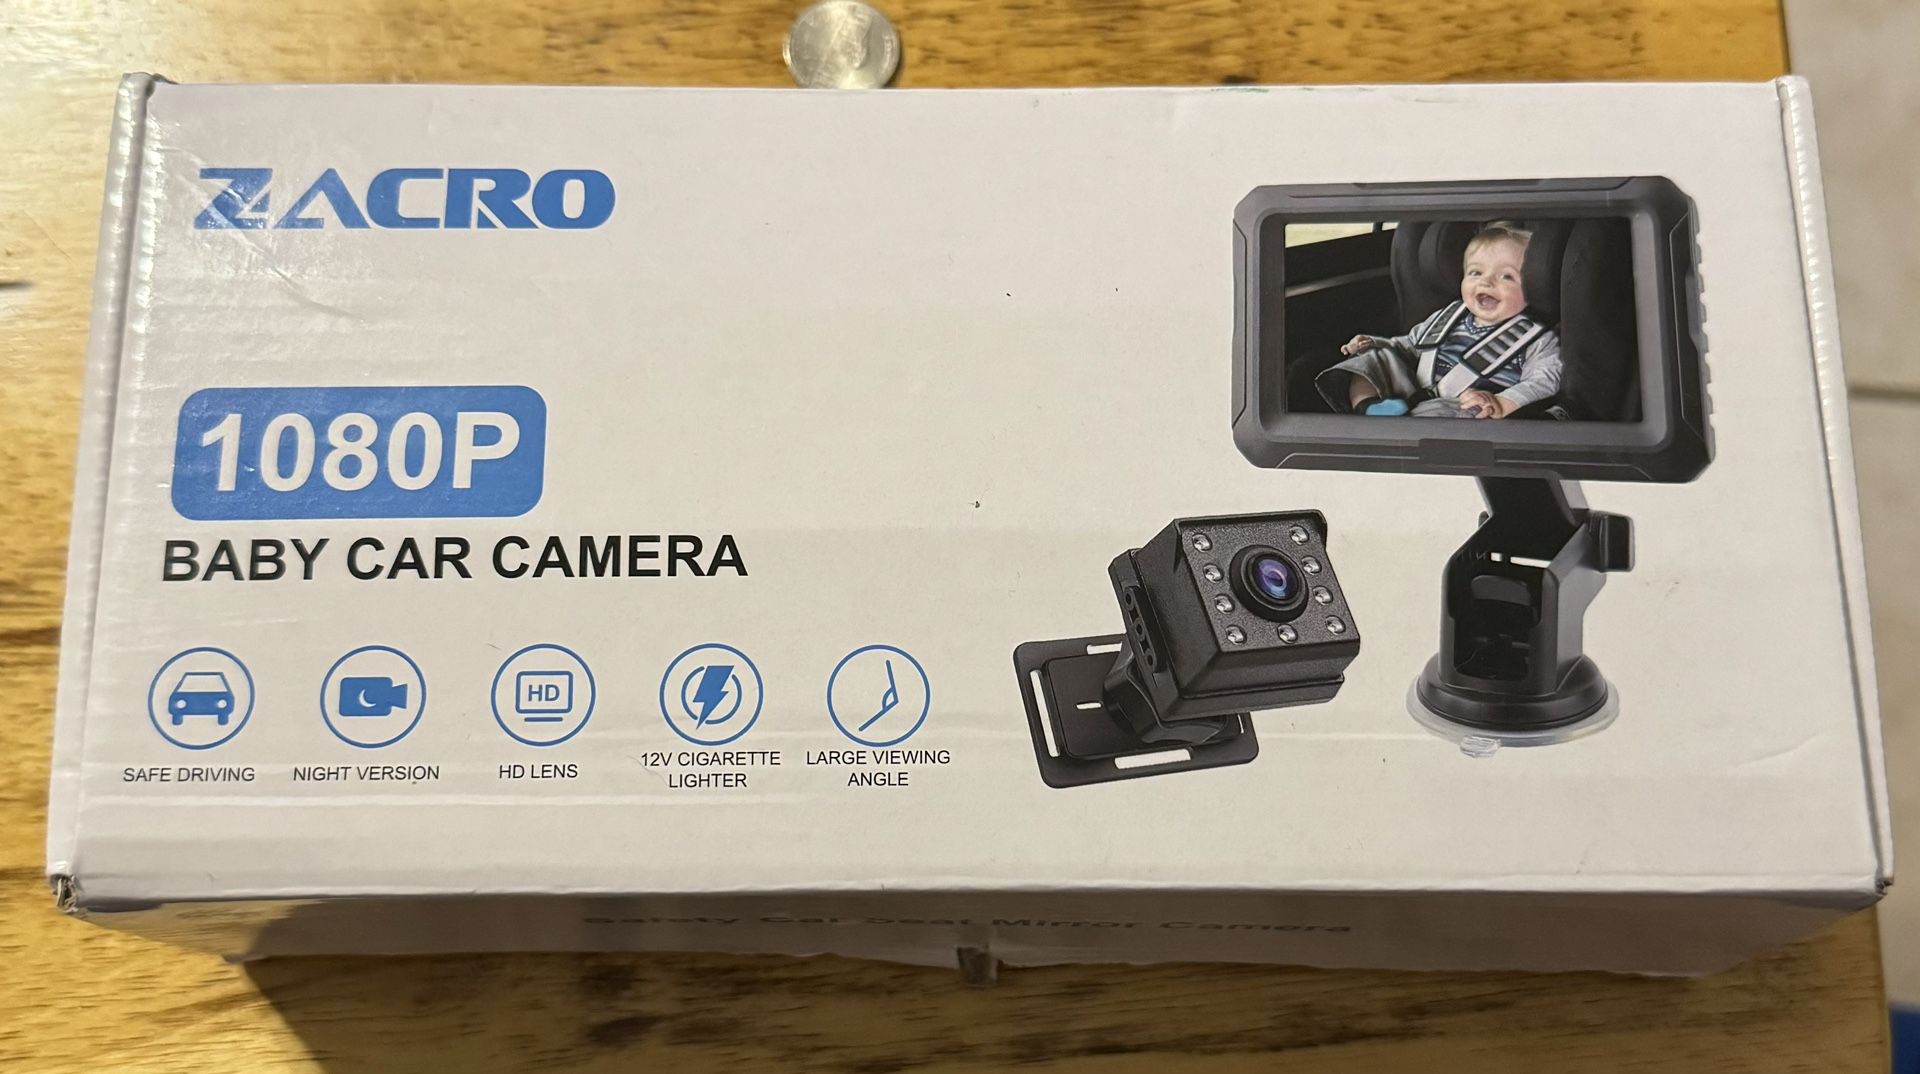 Zacro 1080P Baby Car Camera